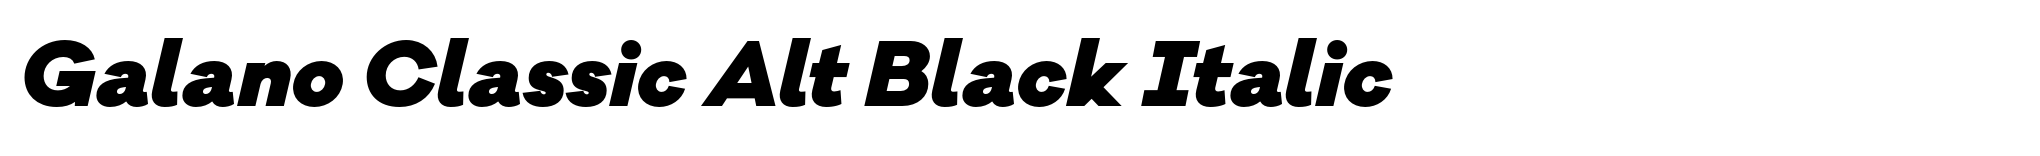 Galano Classic Alt Black Italic image